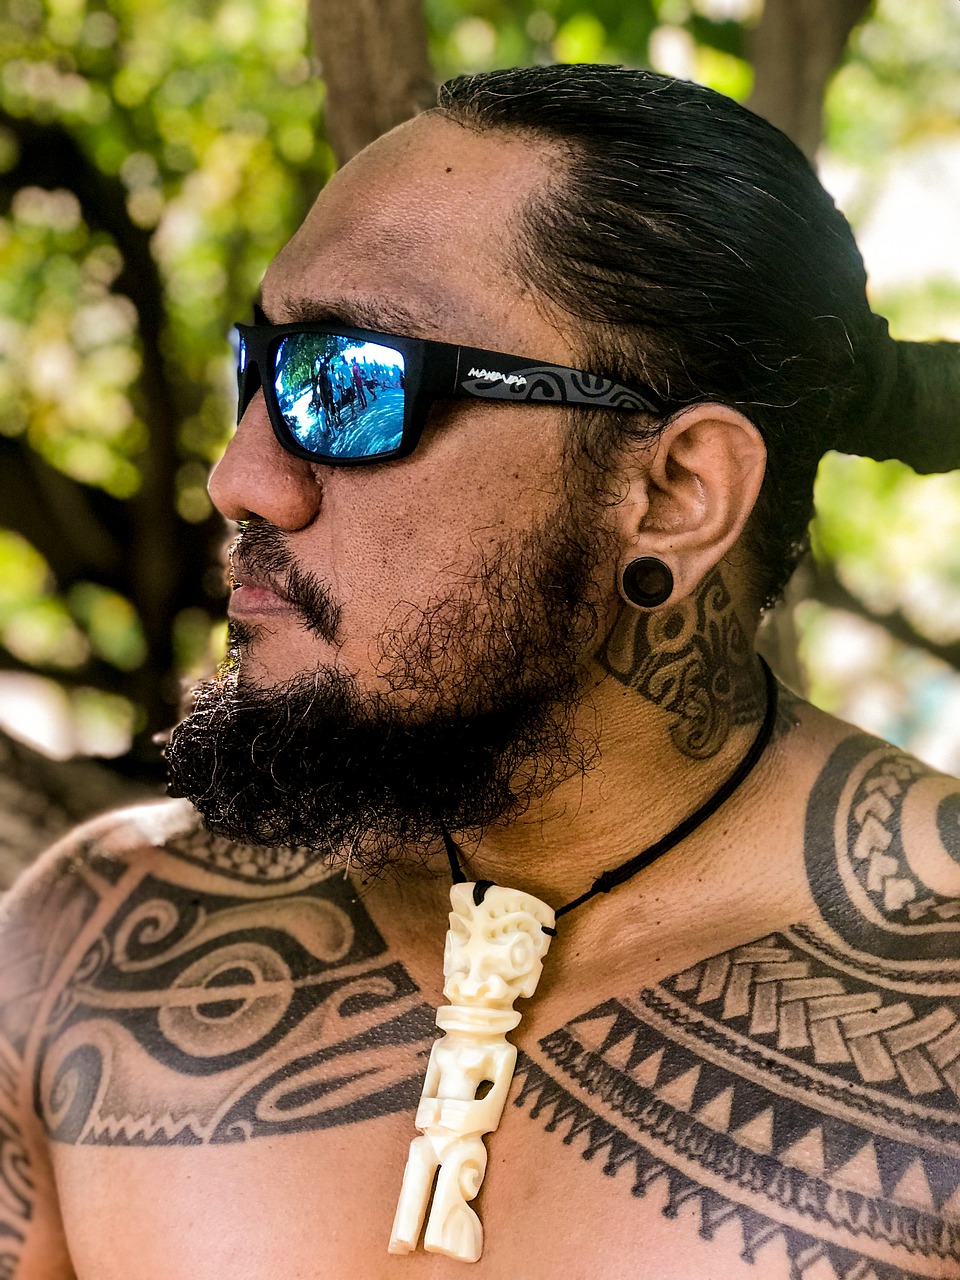 Tattooed Hawaiian man with sunglasses